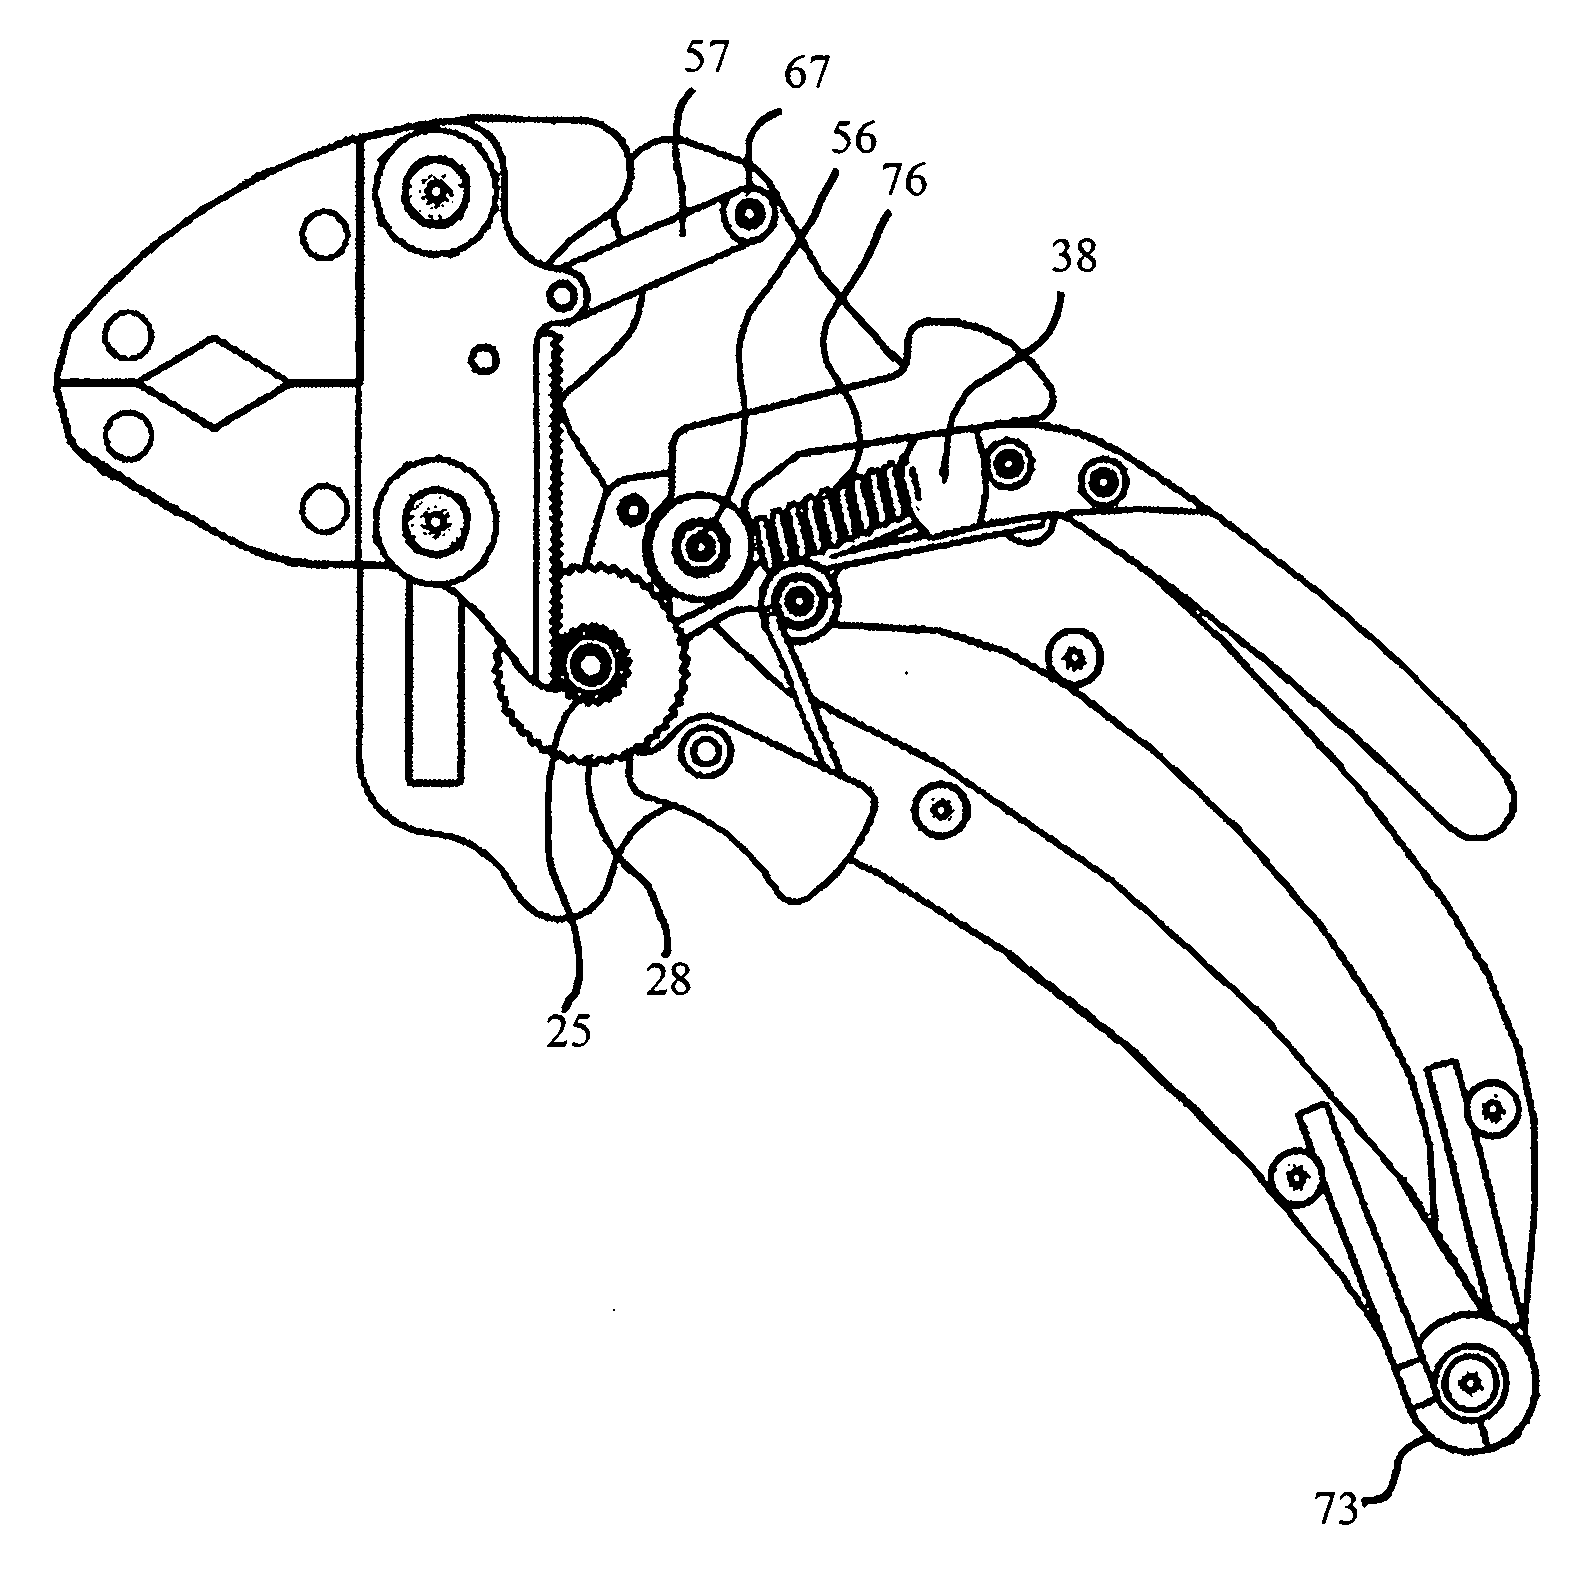 Release auto-grip locking tool